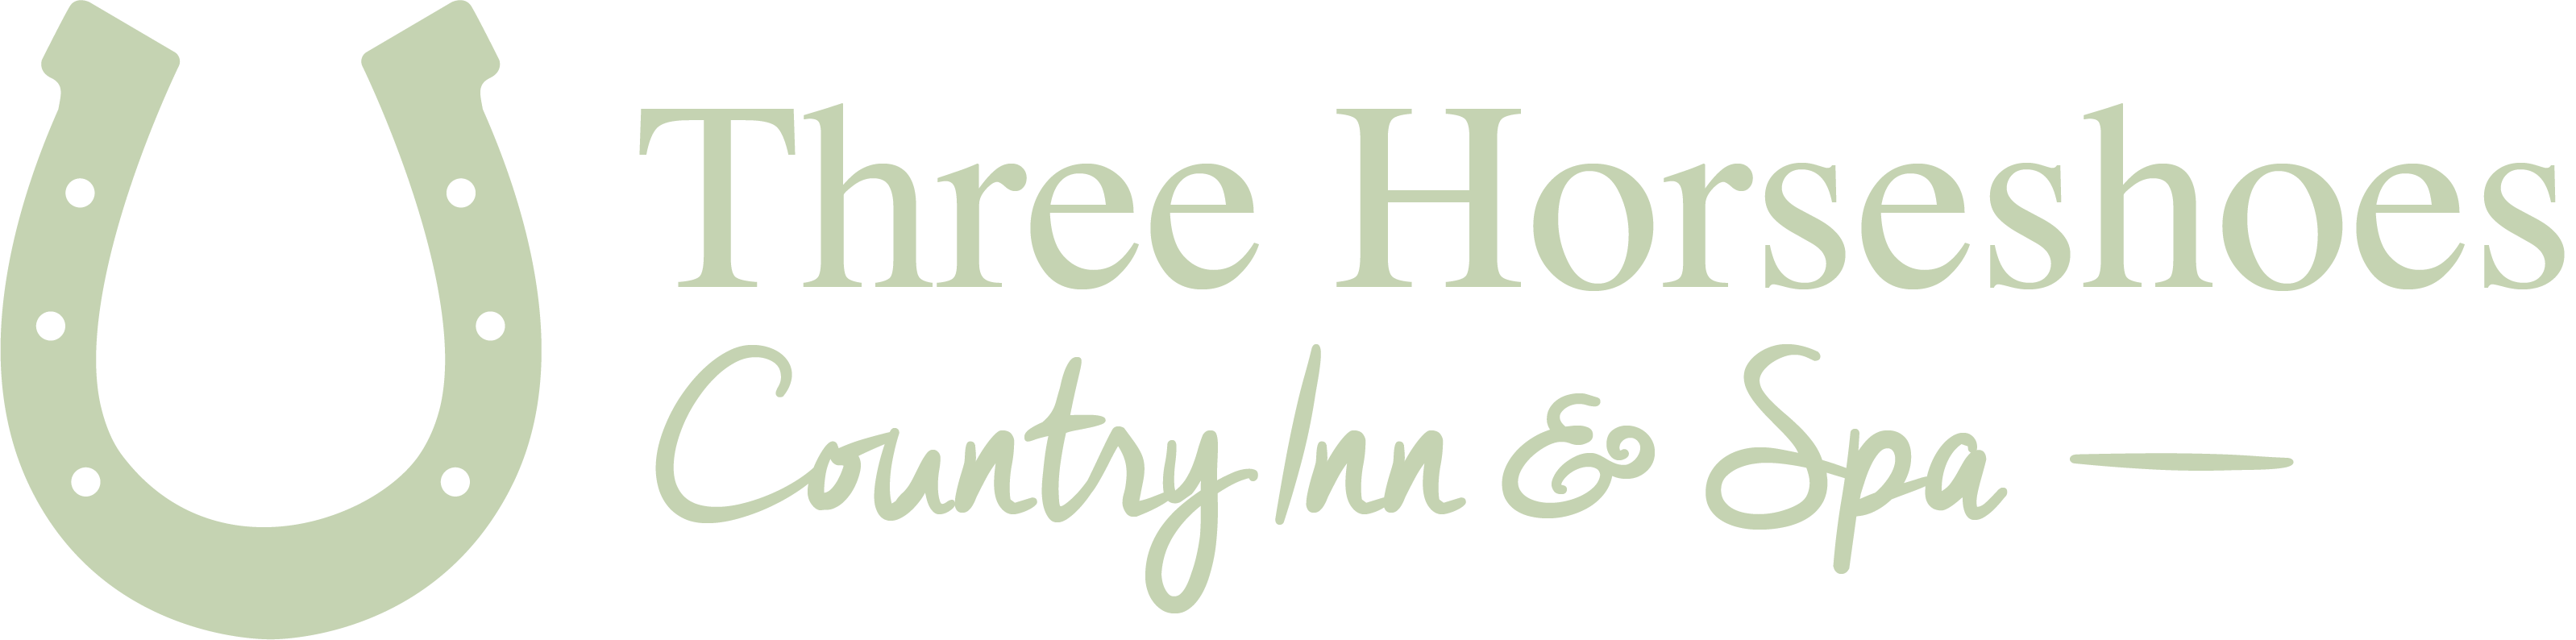 The Three Horseshoes Country Inn & Spa